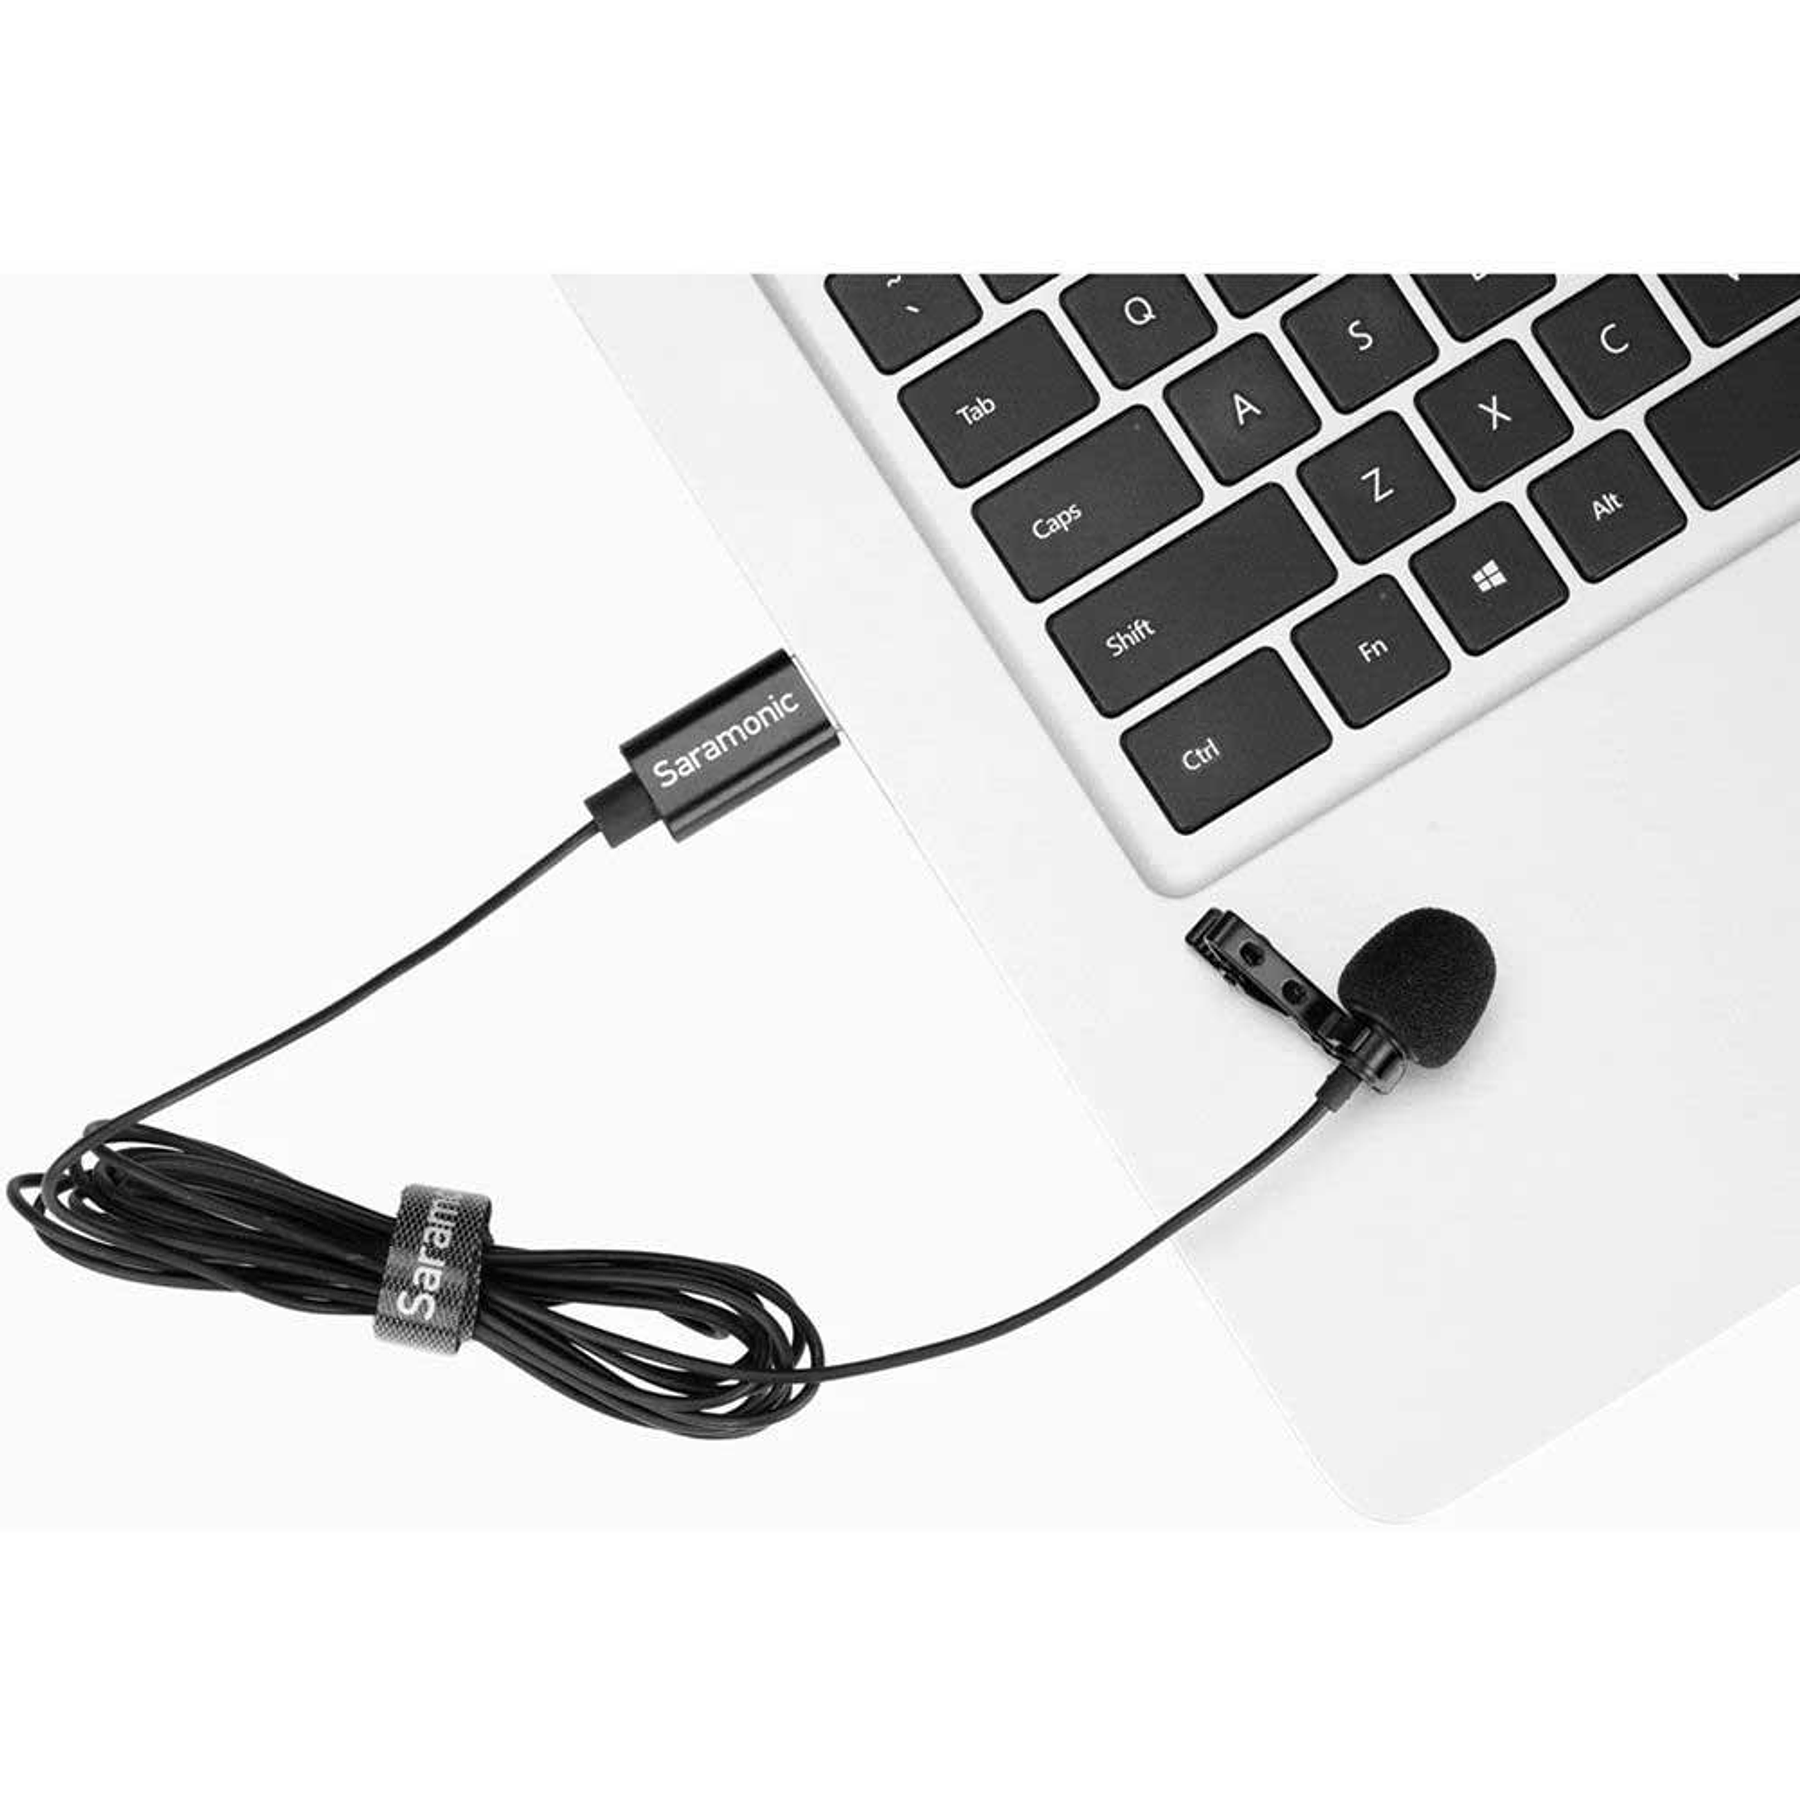 Microfono Saramonic SR-ULM10 USB Omnidireccional Lavalier Cable 2 m